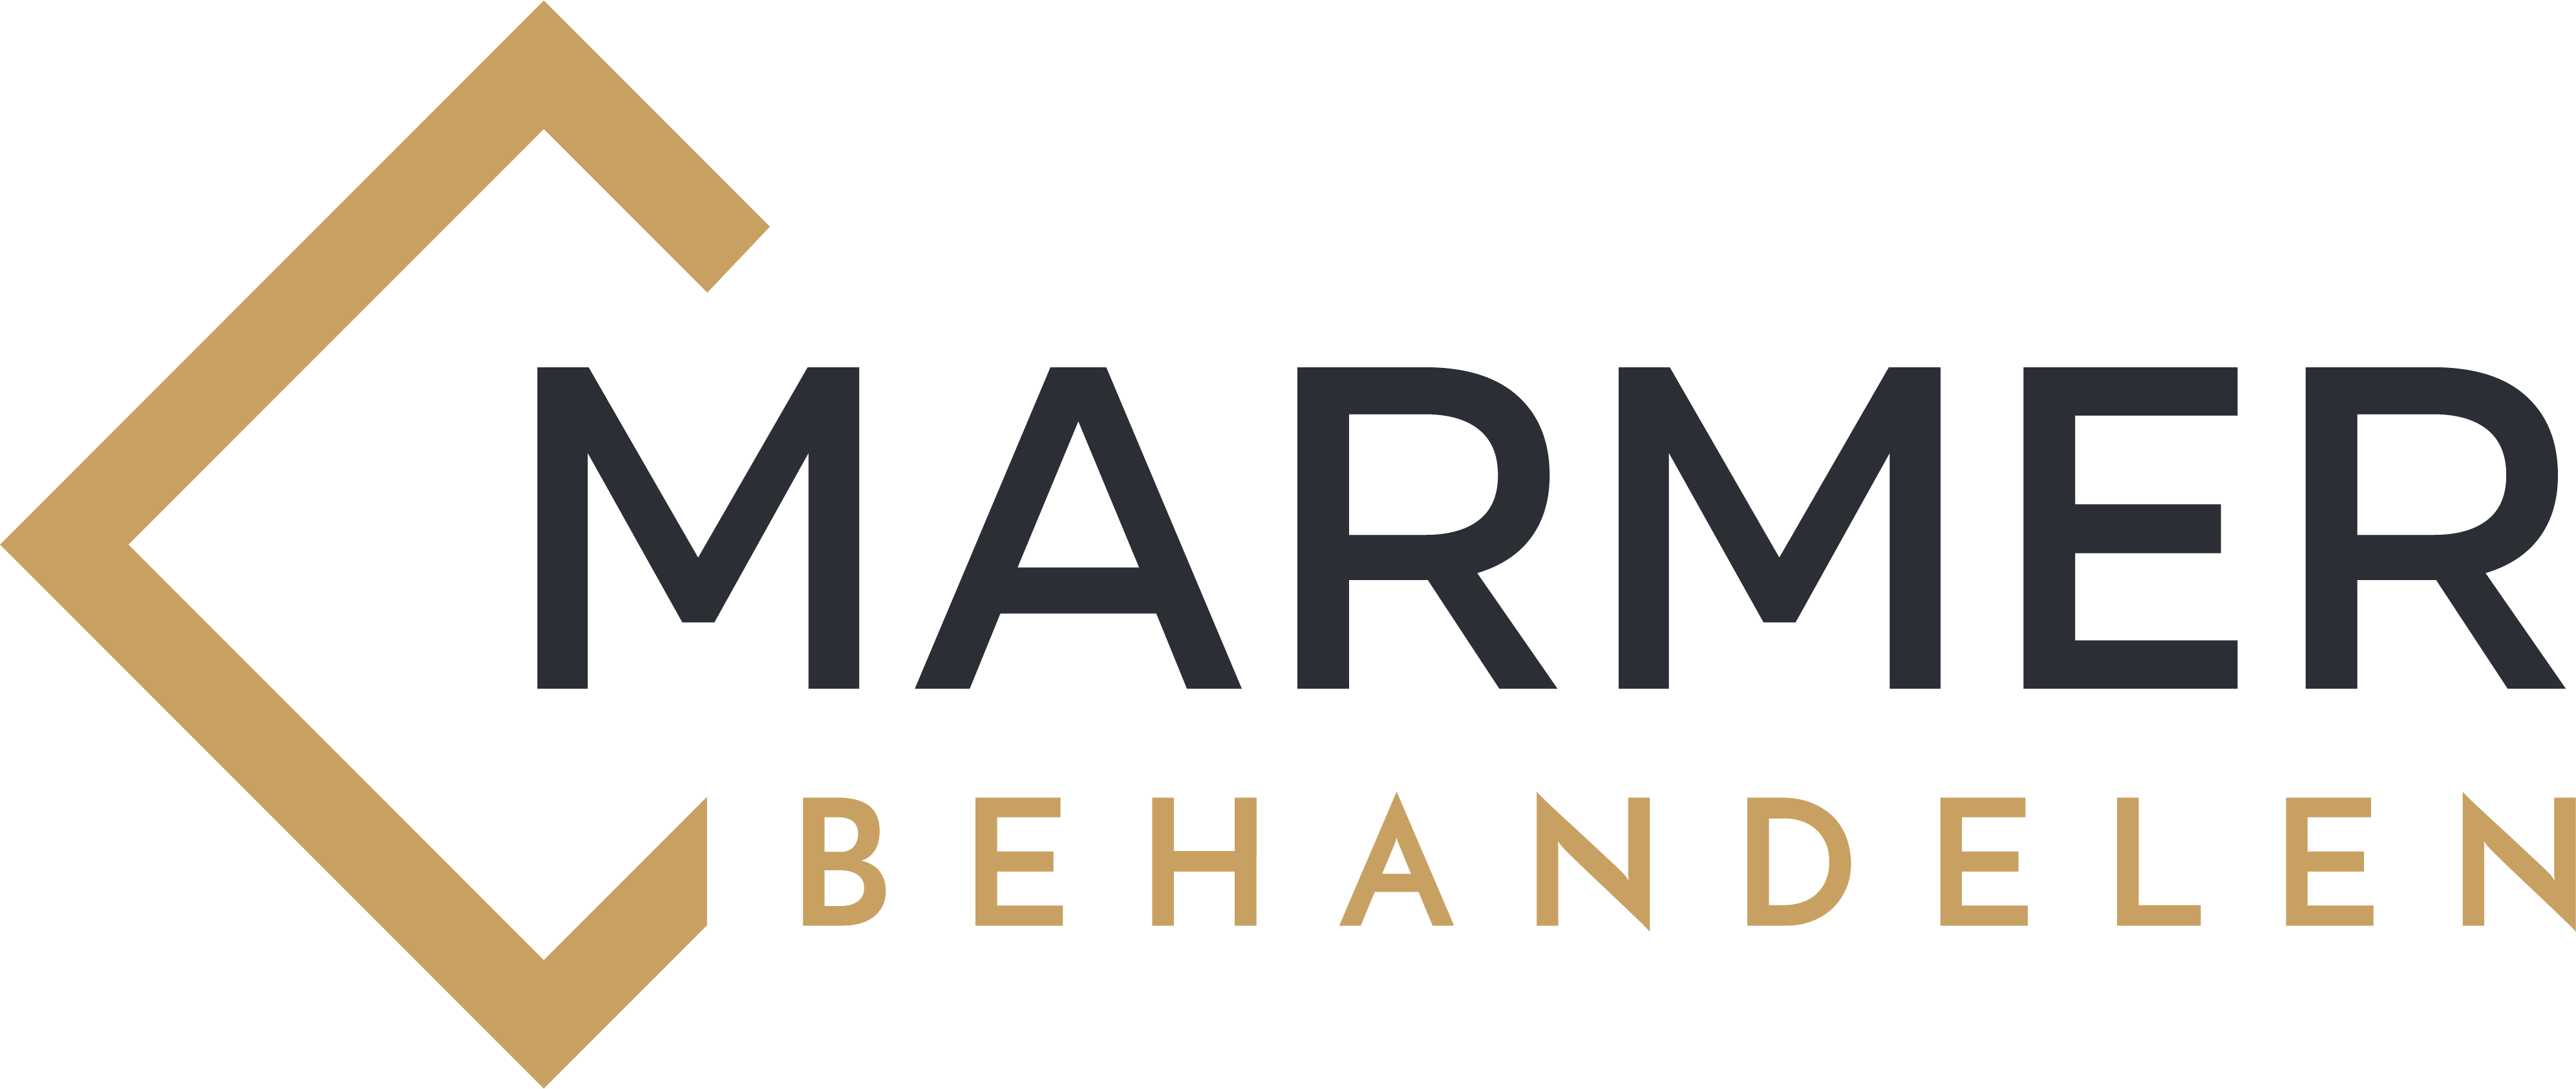 Marmer logo png